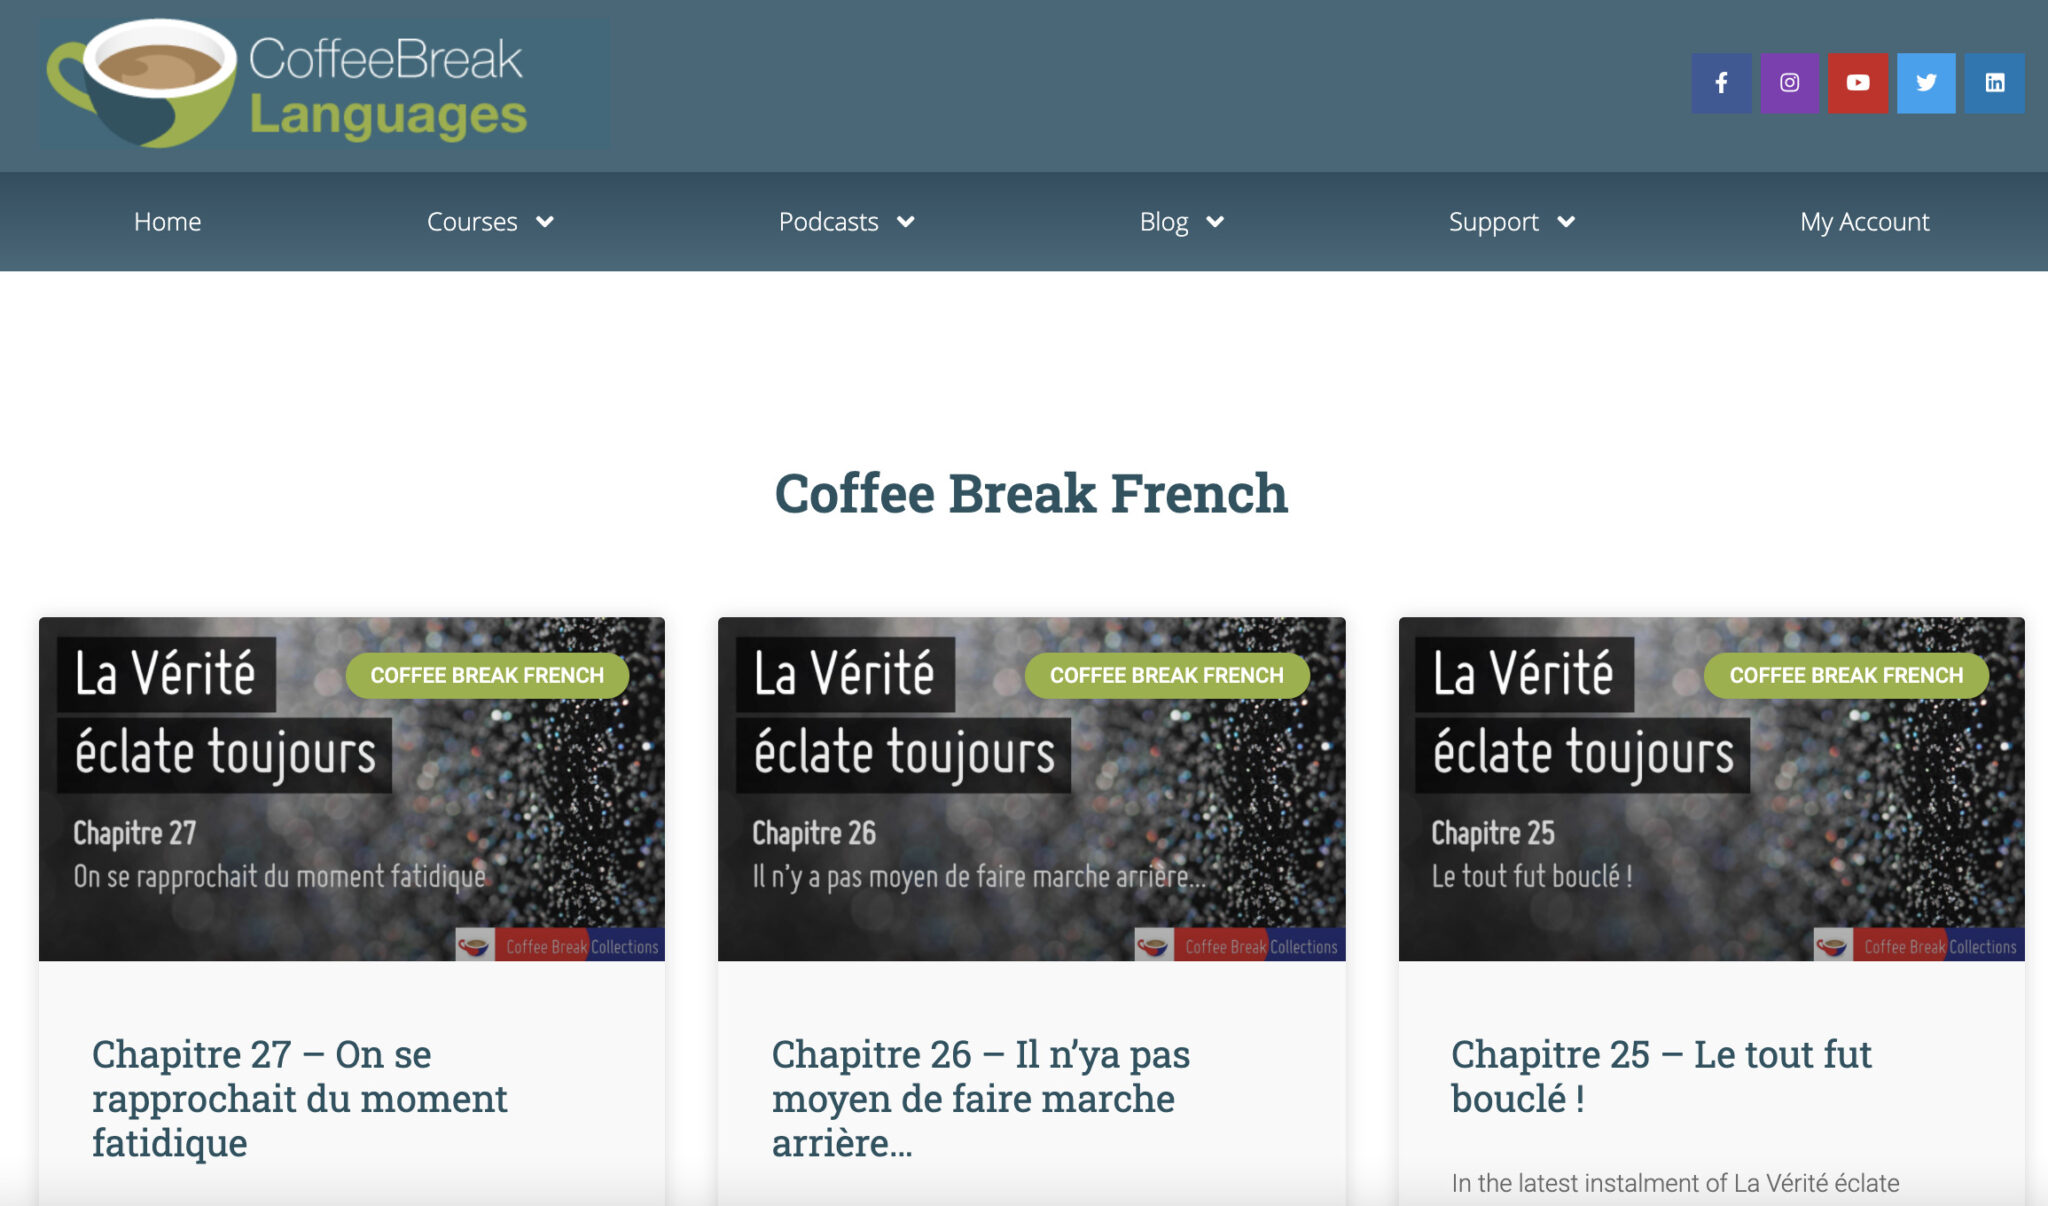 COFFEE BREAK FRENCH